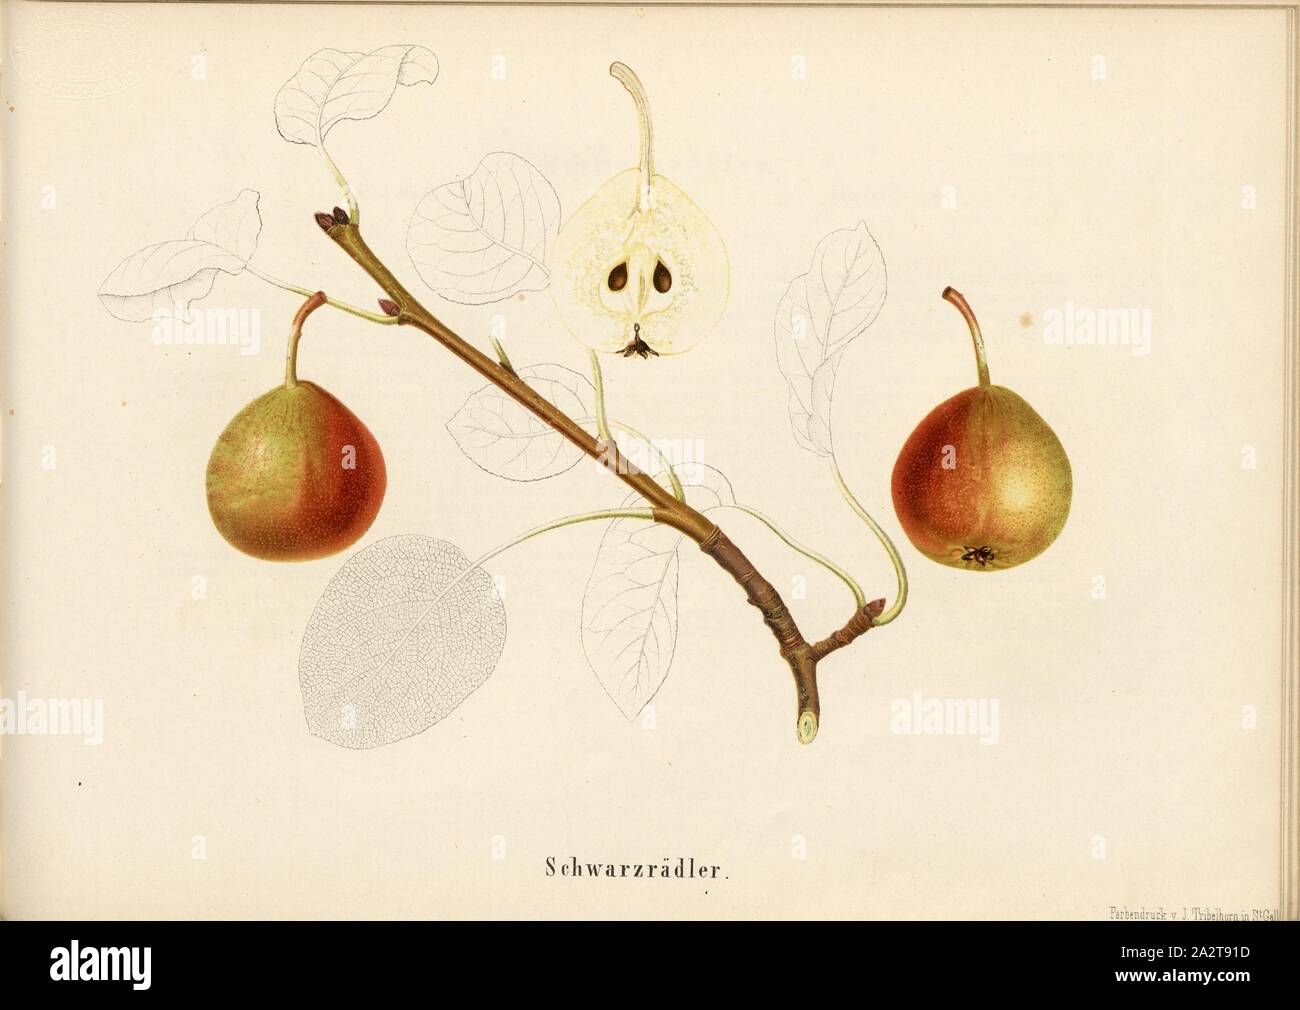 Schwarzrädler, Swiss pear variety, Signed: Farbendruck v., J. Tribelhorn, Fig. 31, Tribelhorn, J. (imp.), 1863, Schweizerisch. Landwirtschaftl. Verein (Hg.): Schweizerische Obstsorten. [S.l.]: Schweizerischer Landwirtschaftlicher Verein, [1863 Stock Photo